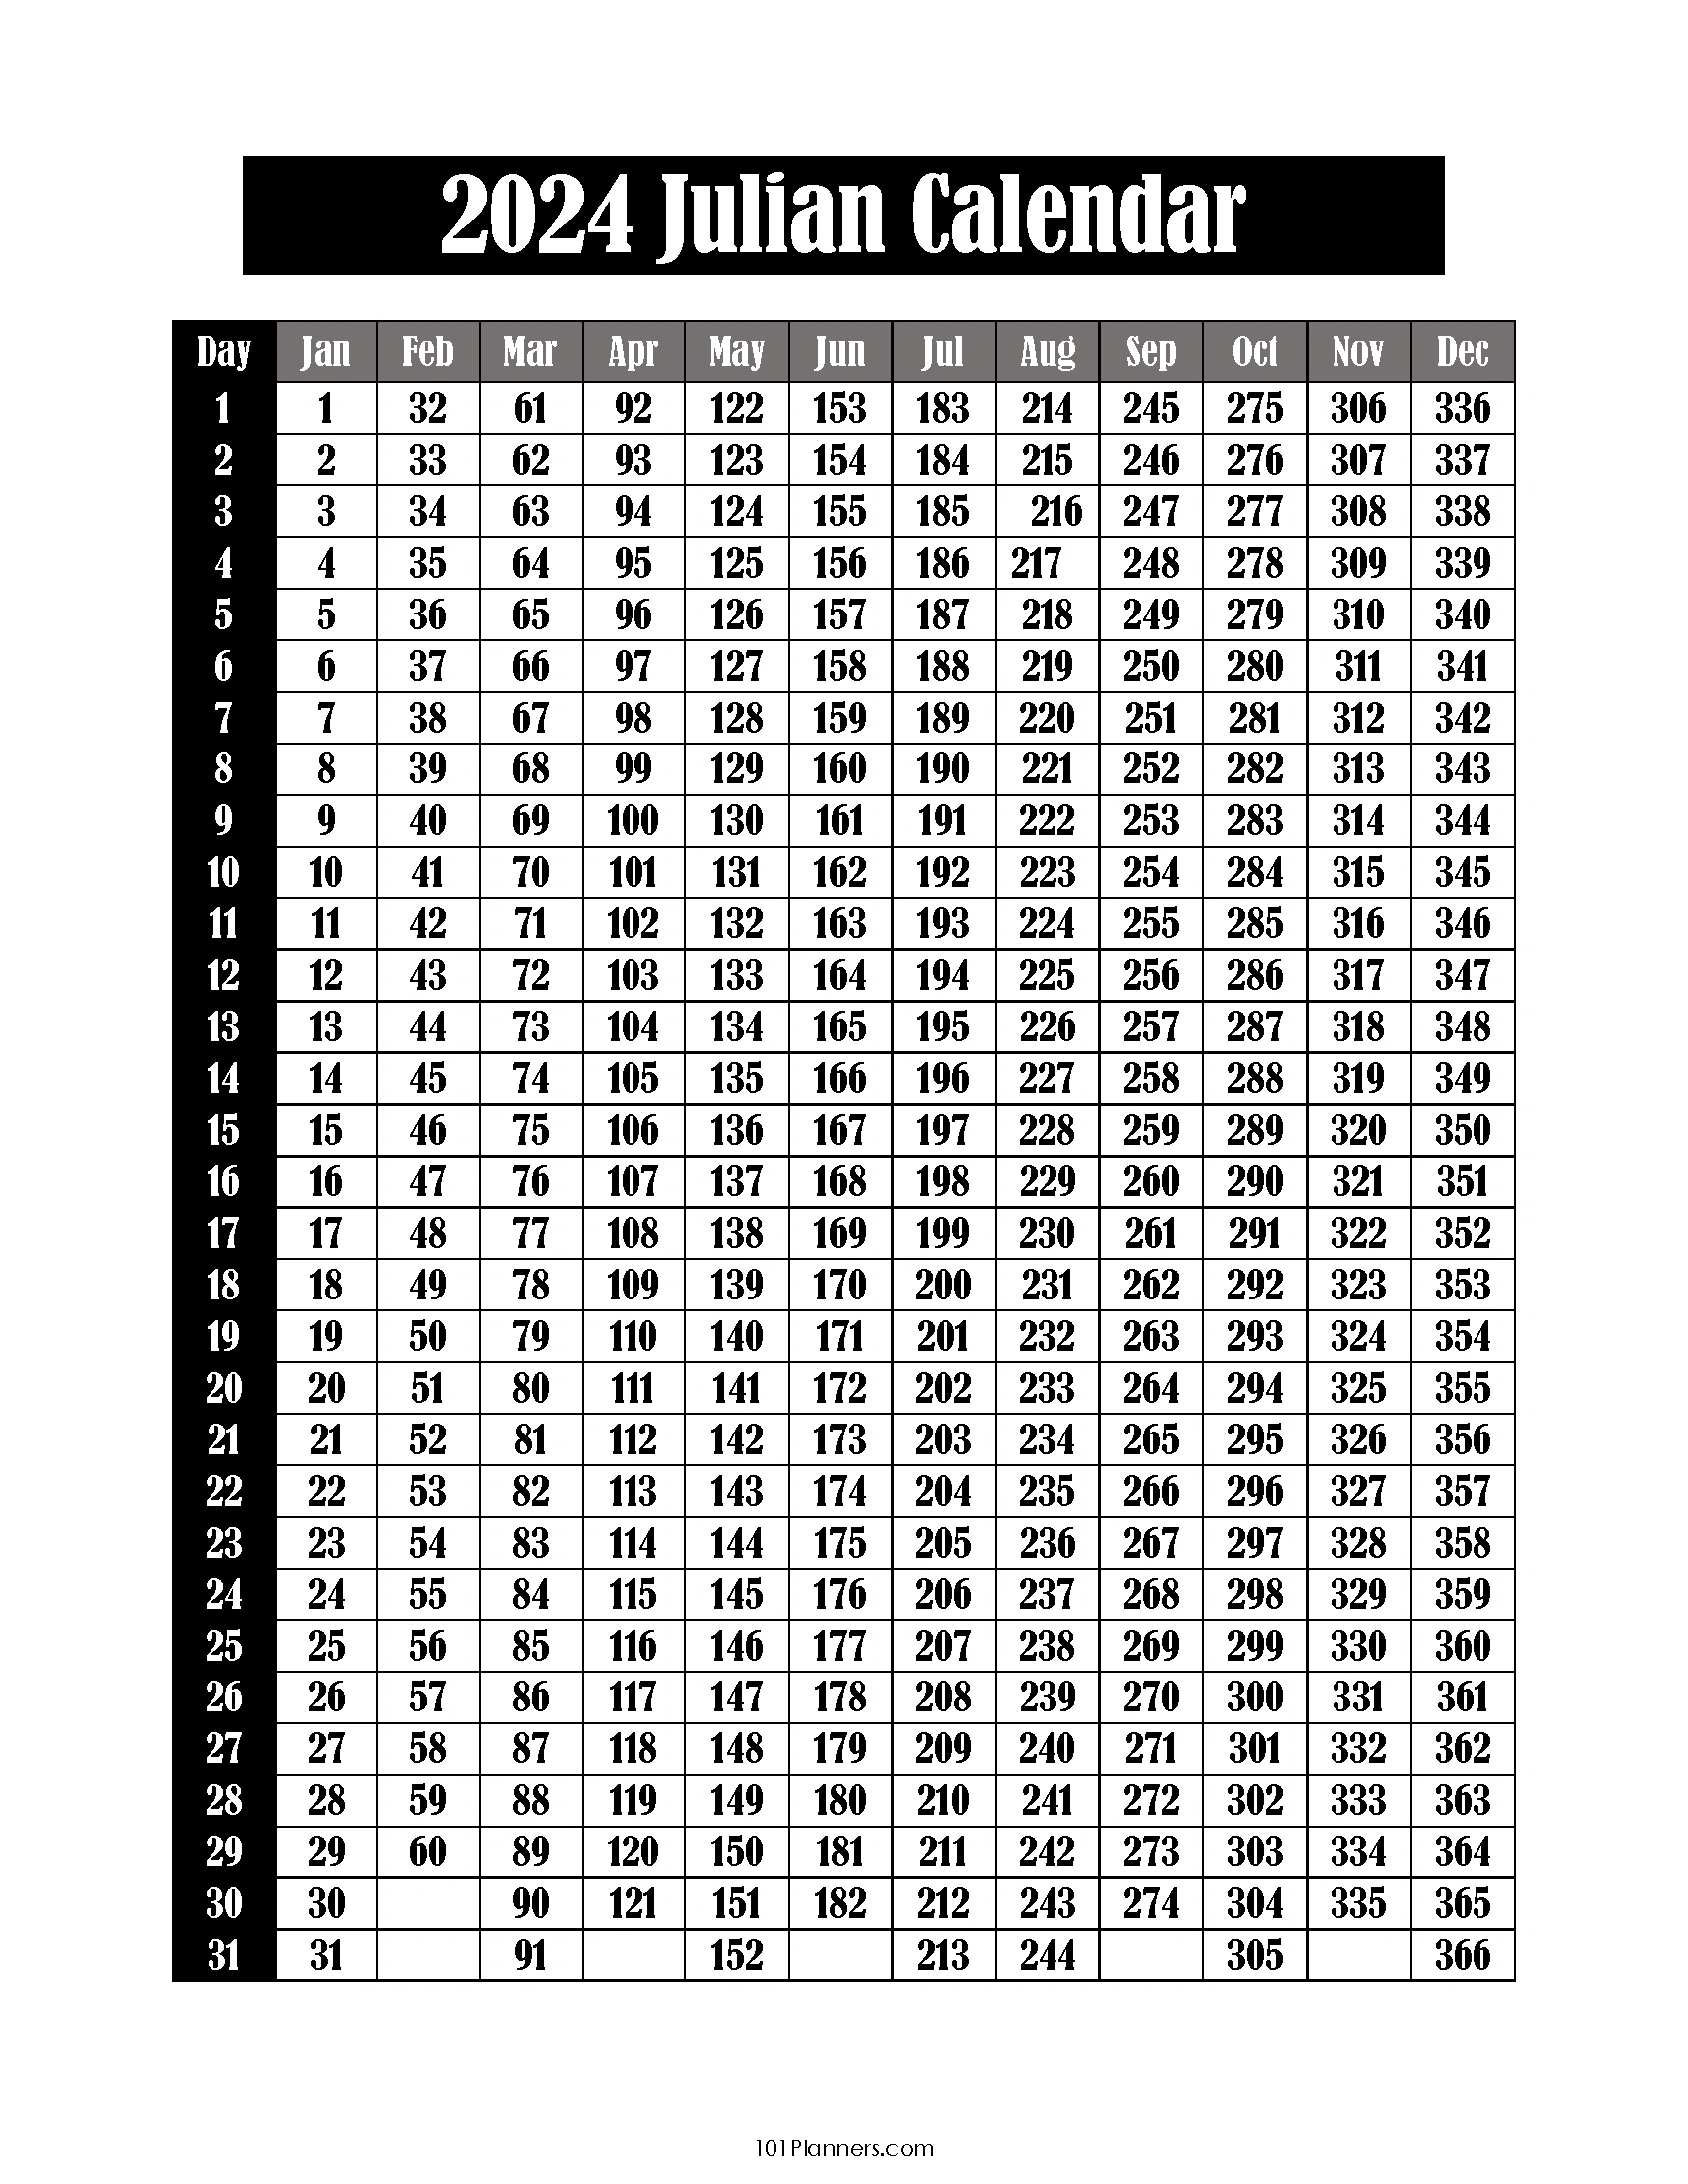 Free Printable Julian Calendar 2024-2032 | Julian Date Today within 2024 Julian Calendar Printable